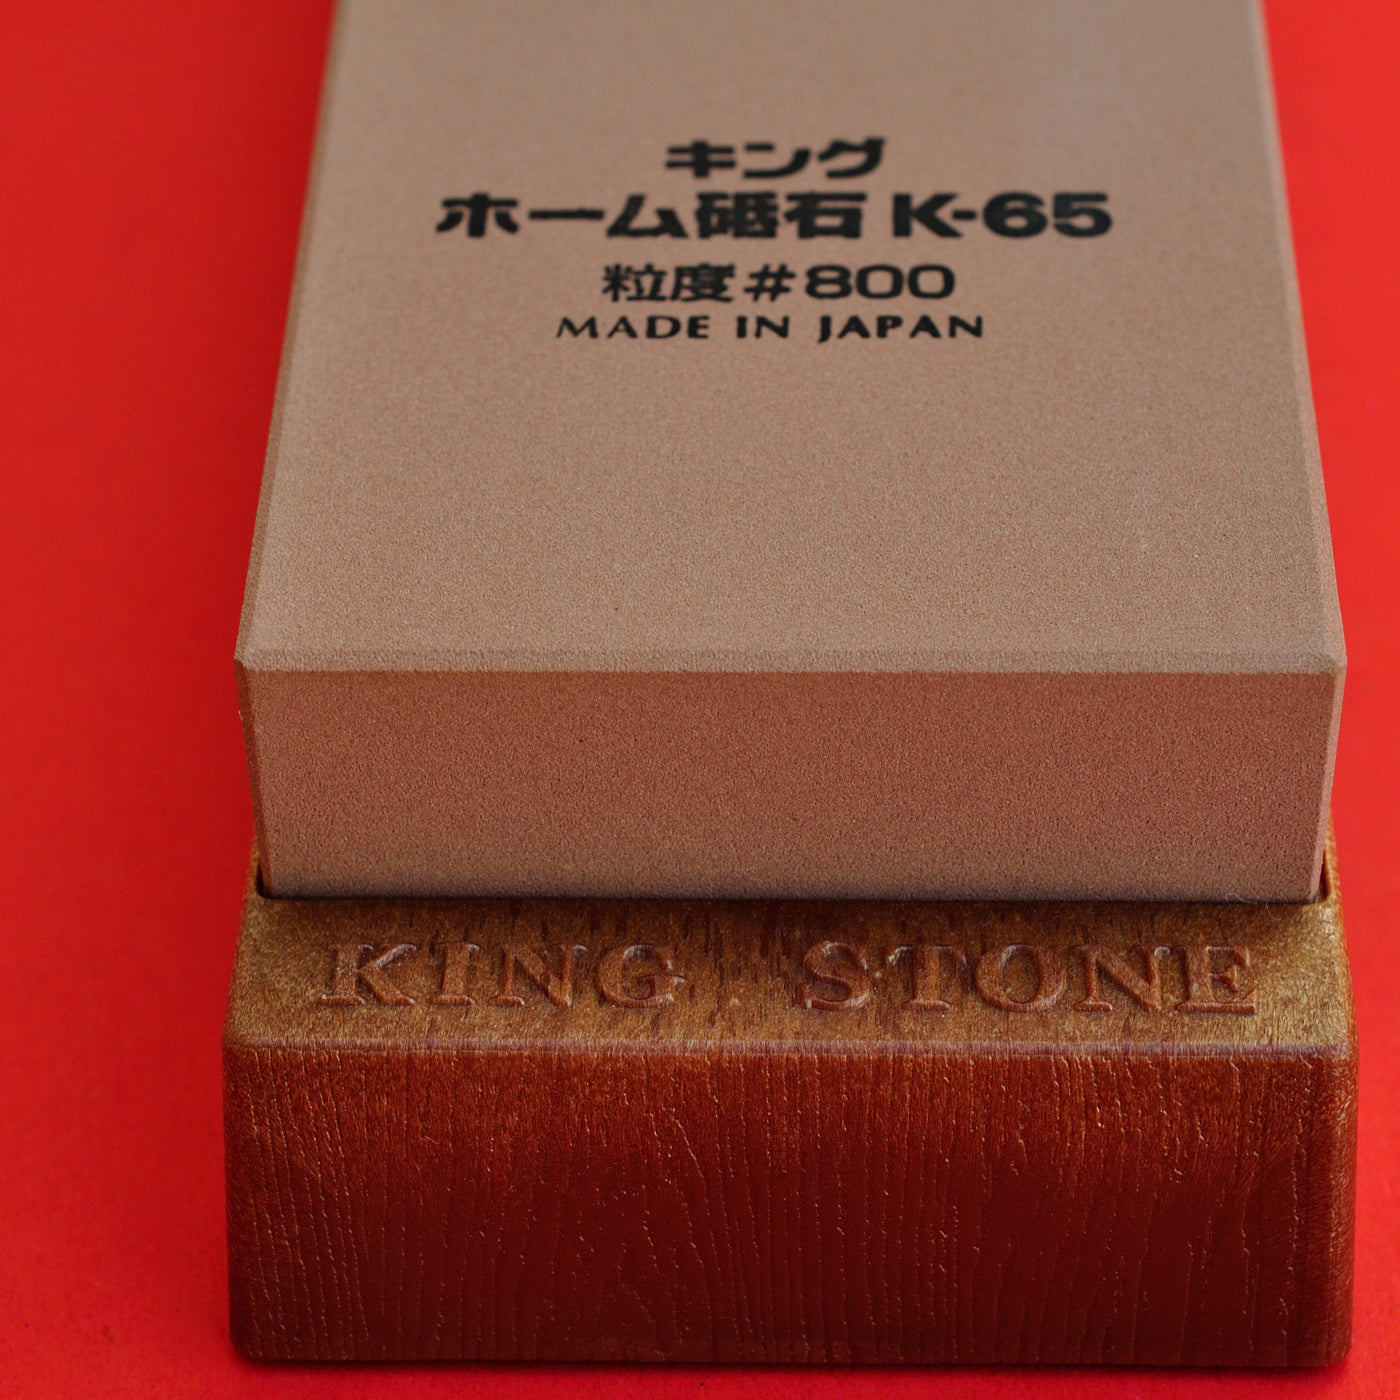 Japanese Kitchen knife Ceramic Sharpening stone Stick Whetstone #800-# – jp- knives.com